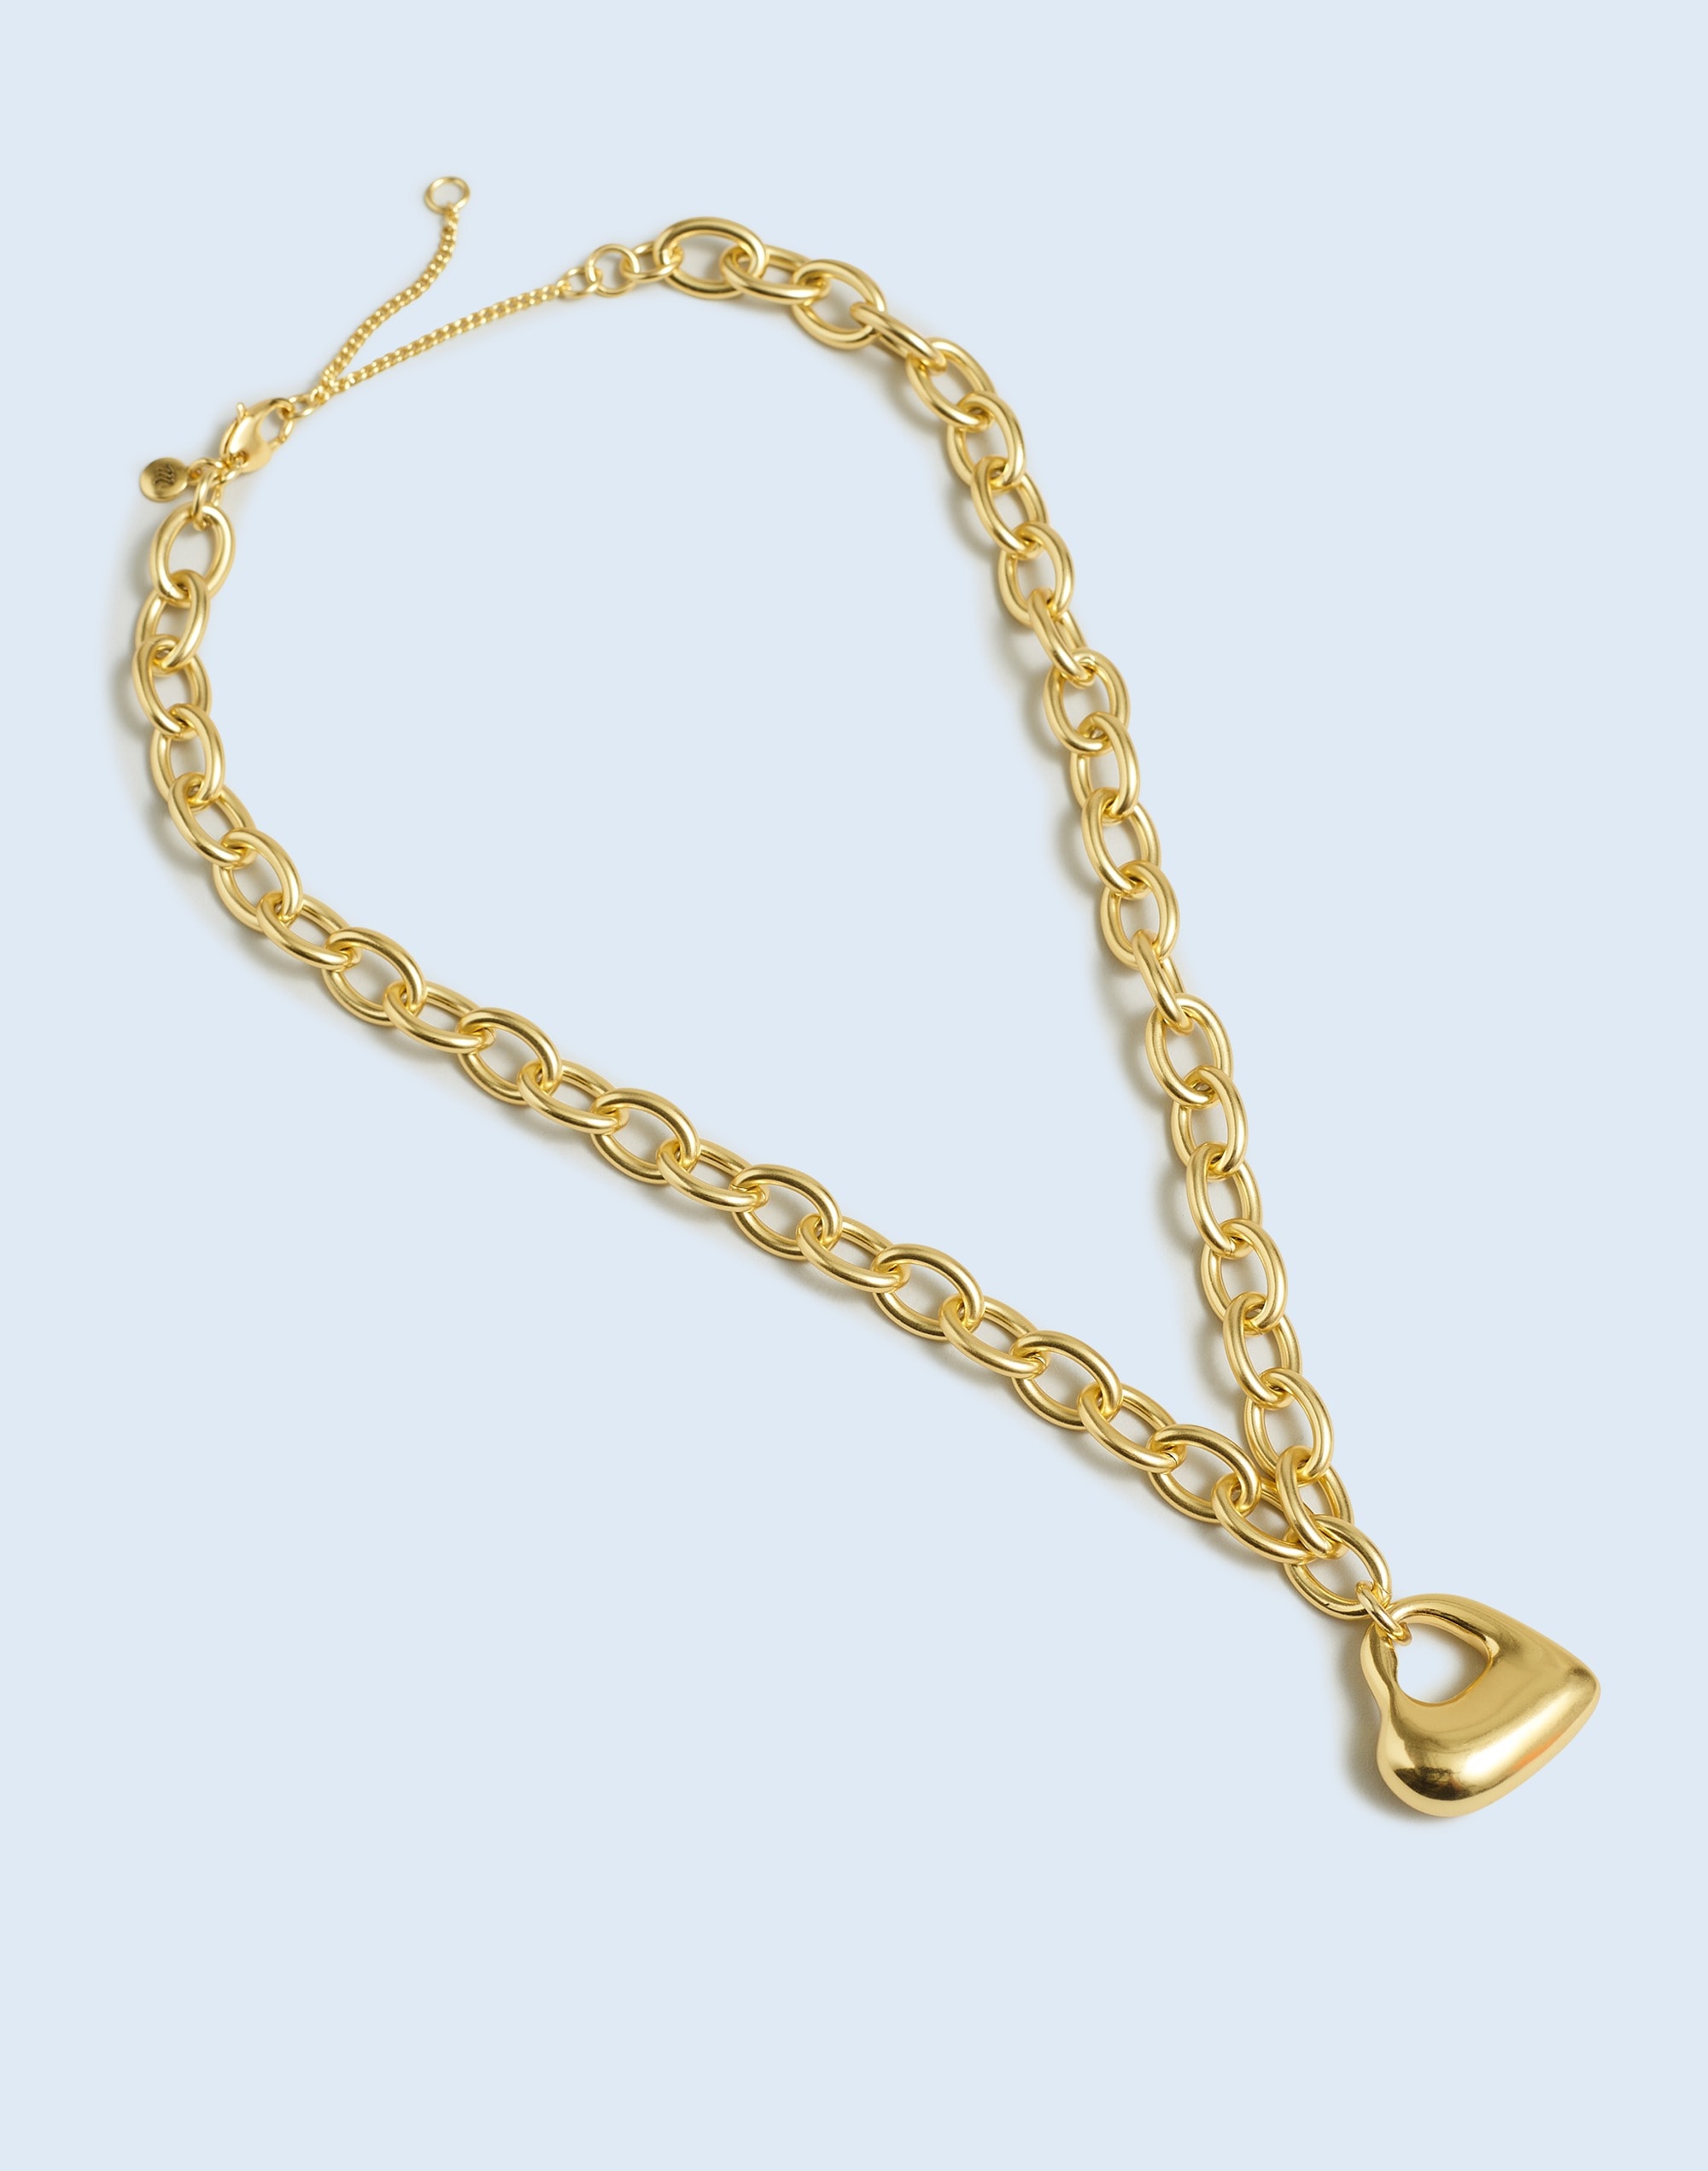 Cutout Puffy Heart Choker Chain Necklace